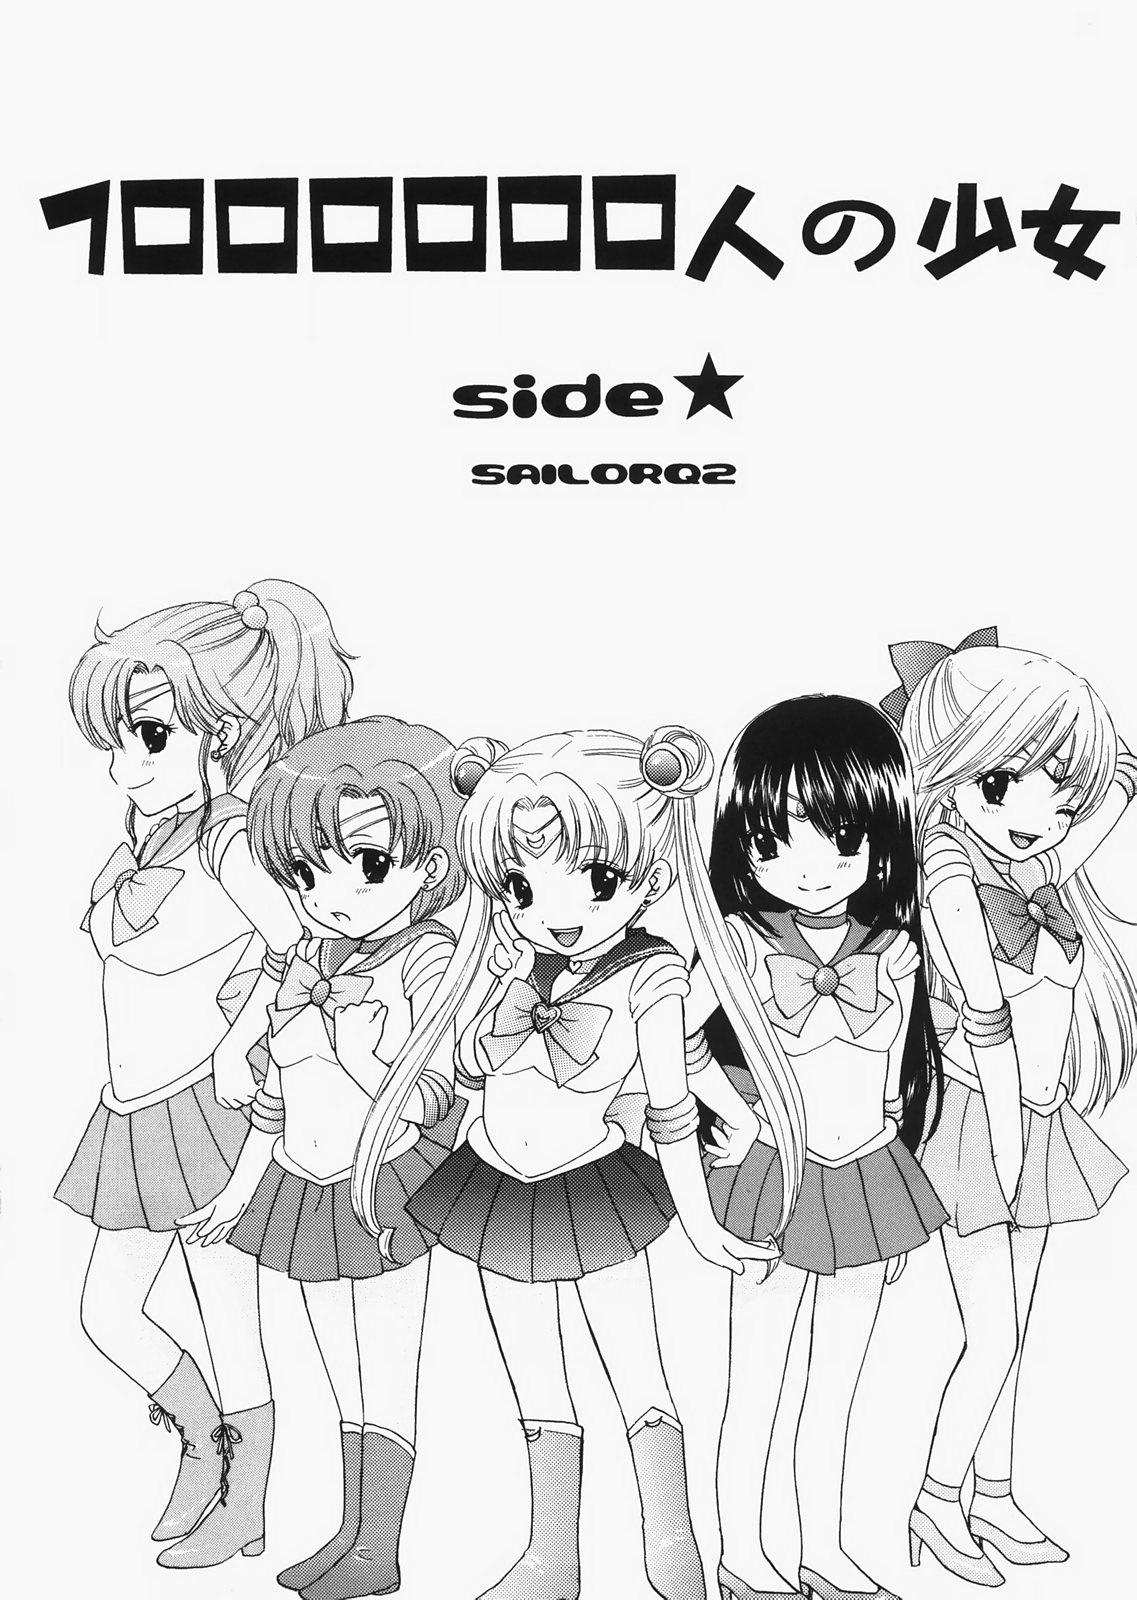 Masturbandose 1000000-nin no Shoujo side star - Sailor moon Chick - Page 4